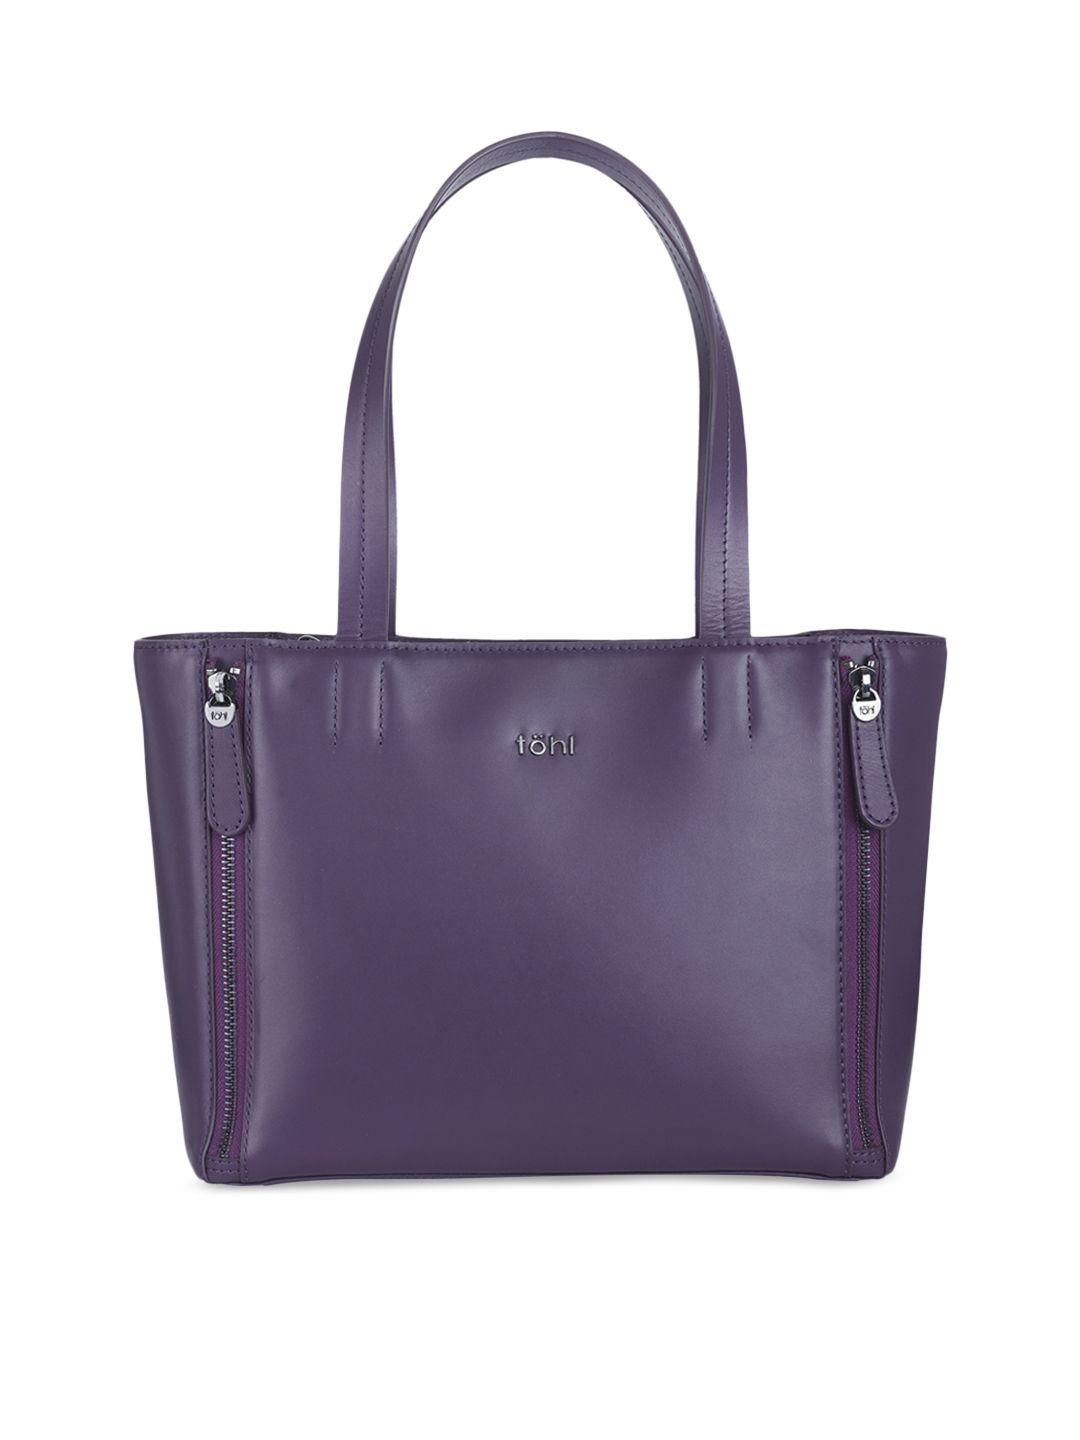 tohl purple solid leather shoulder bag